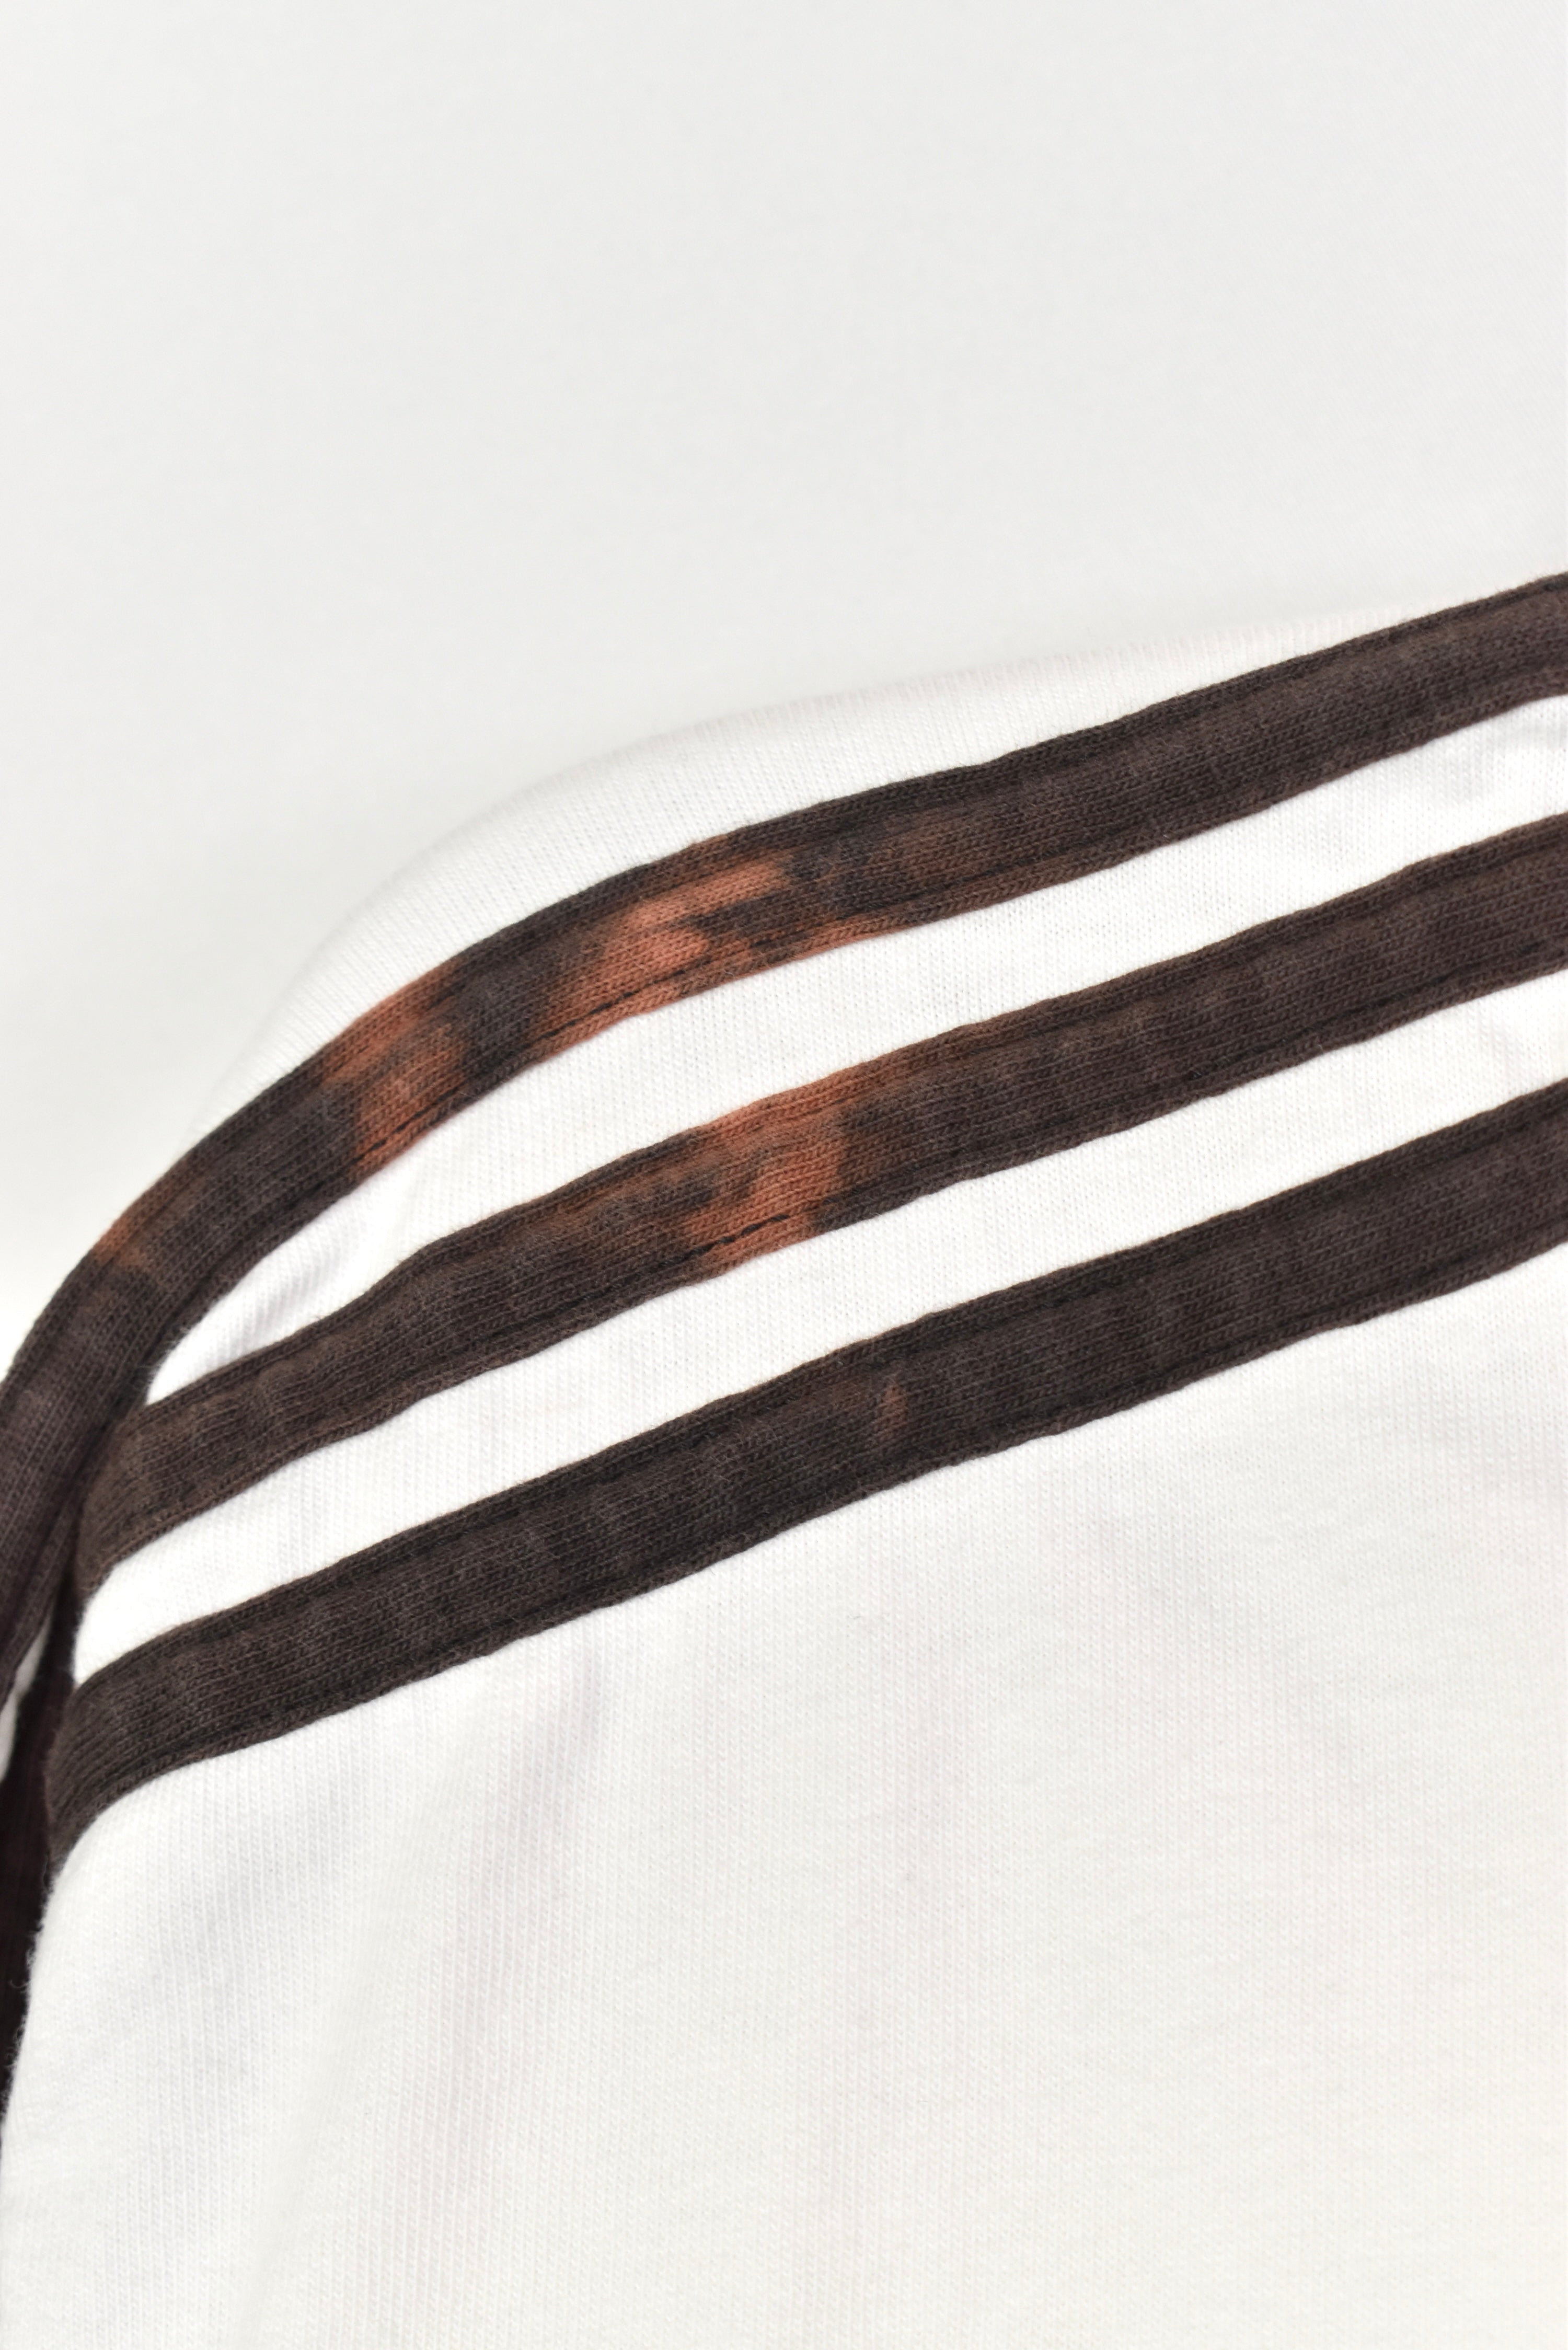 Vintage Adidas shirt, embroidered tee - large, white ADIDAS